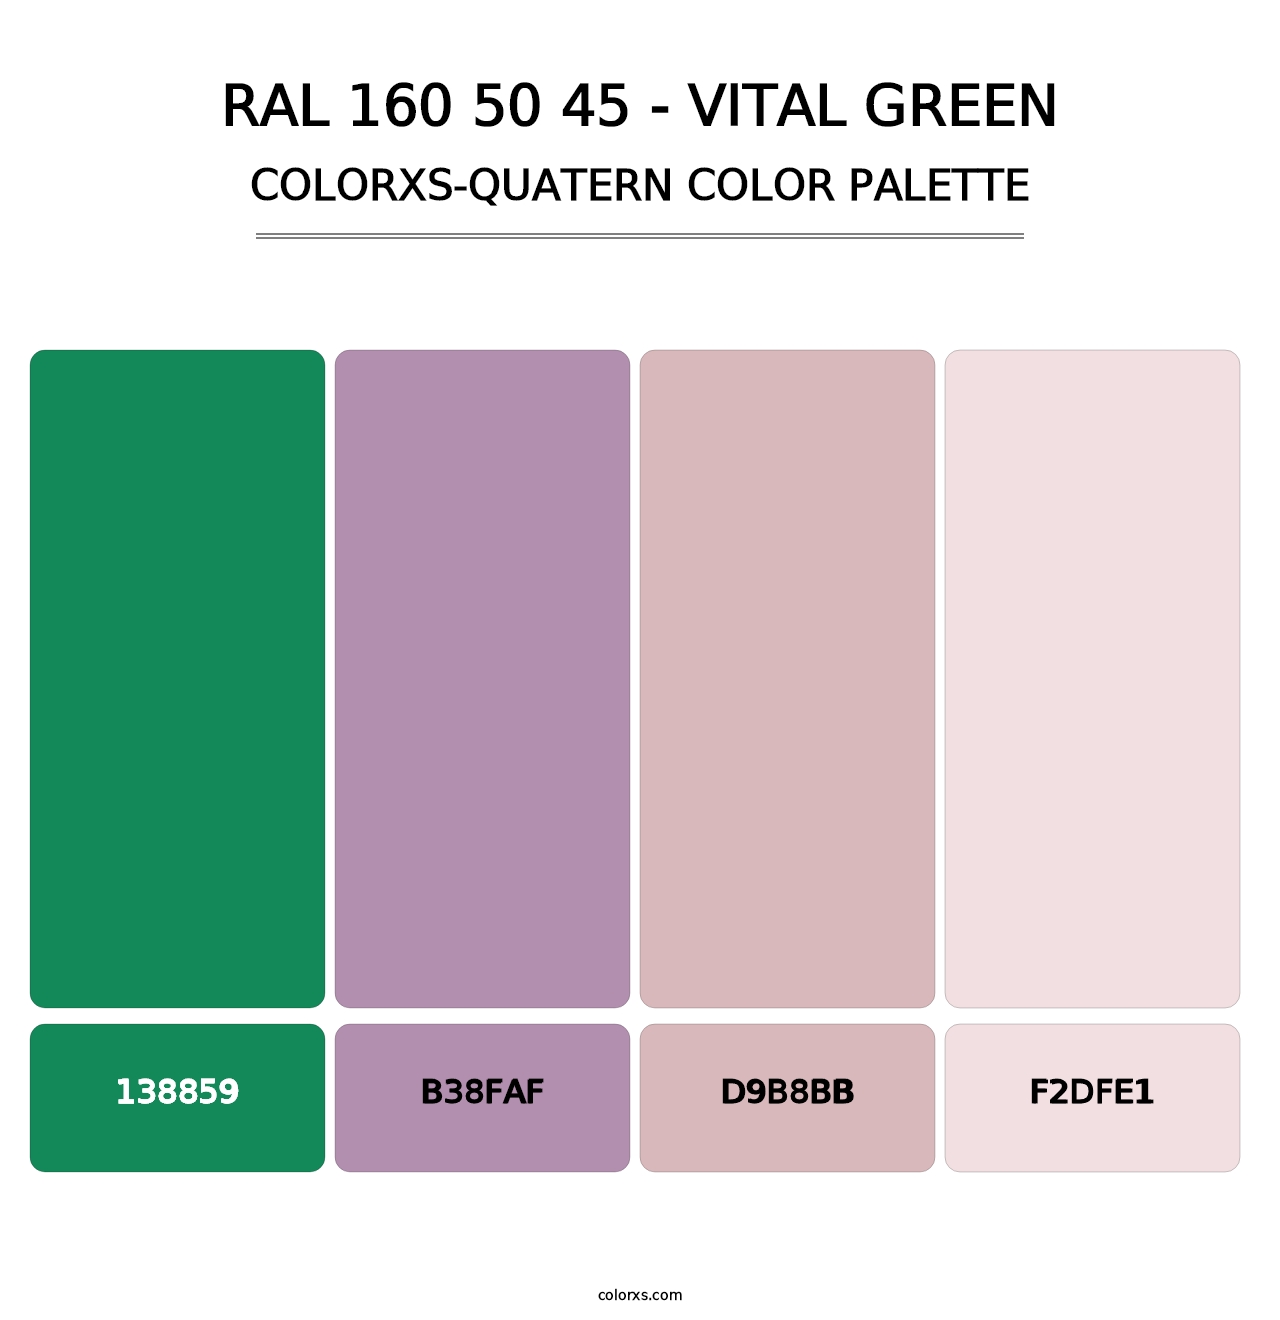 RAL 160 50 45 - Vital Green - Colorxs Quatern Palette